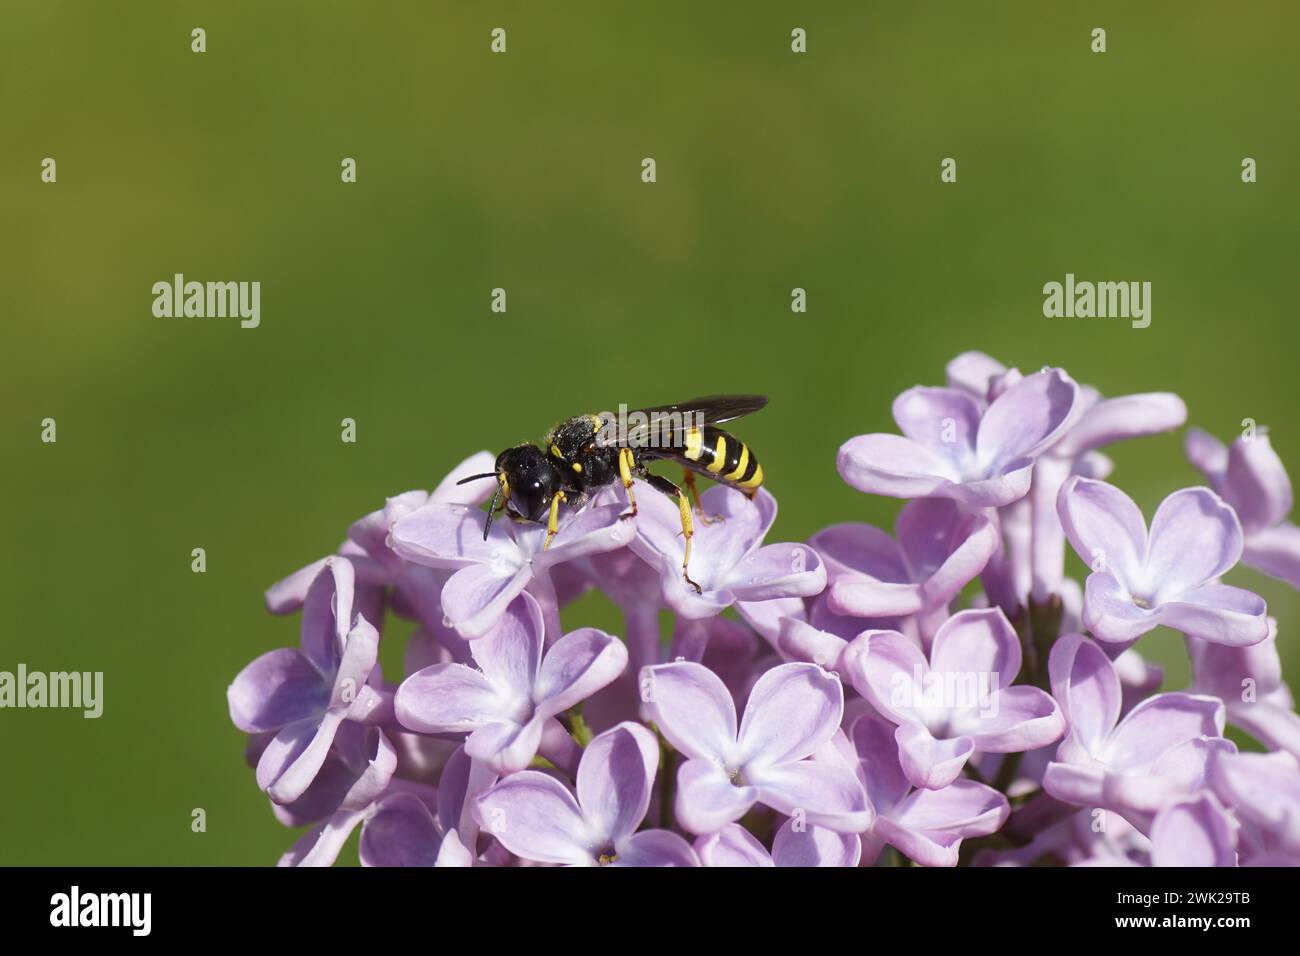 Wasp Ectemnius cephalotes, family Sand wasps, digger wasps (Crabronidae ). On flowers of Lilac or Common Lilac (Syringa vulgaris). Family Oleaceae. Stock Photo